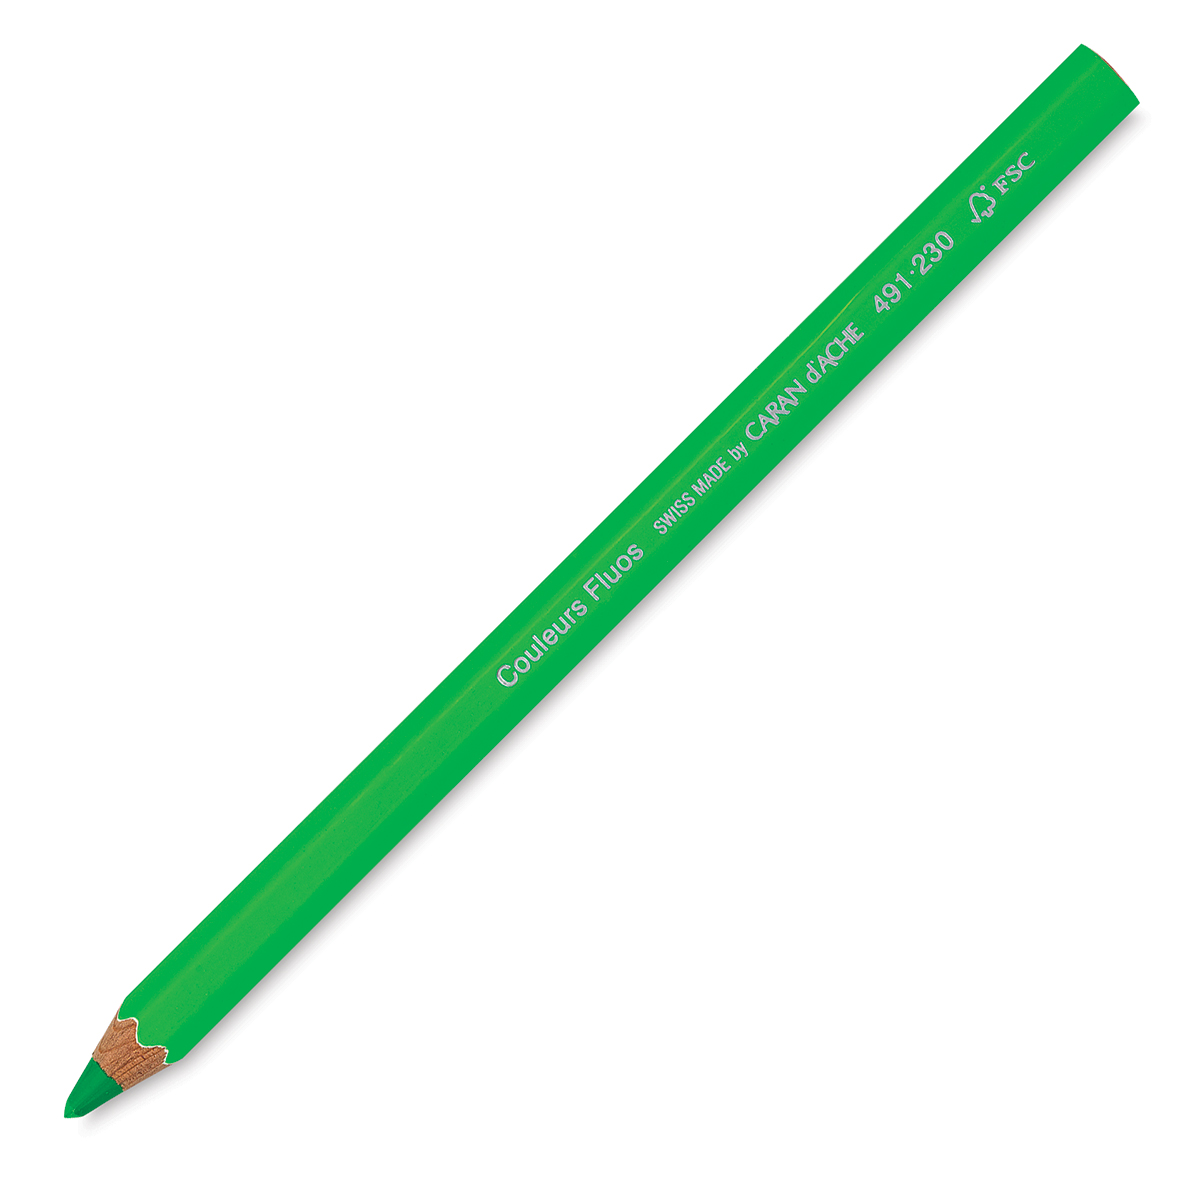 Caran d'Ache Maxi Fluos Colour Pencils - Choose one color